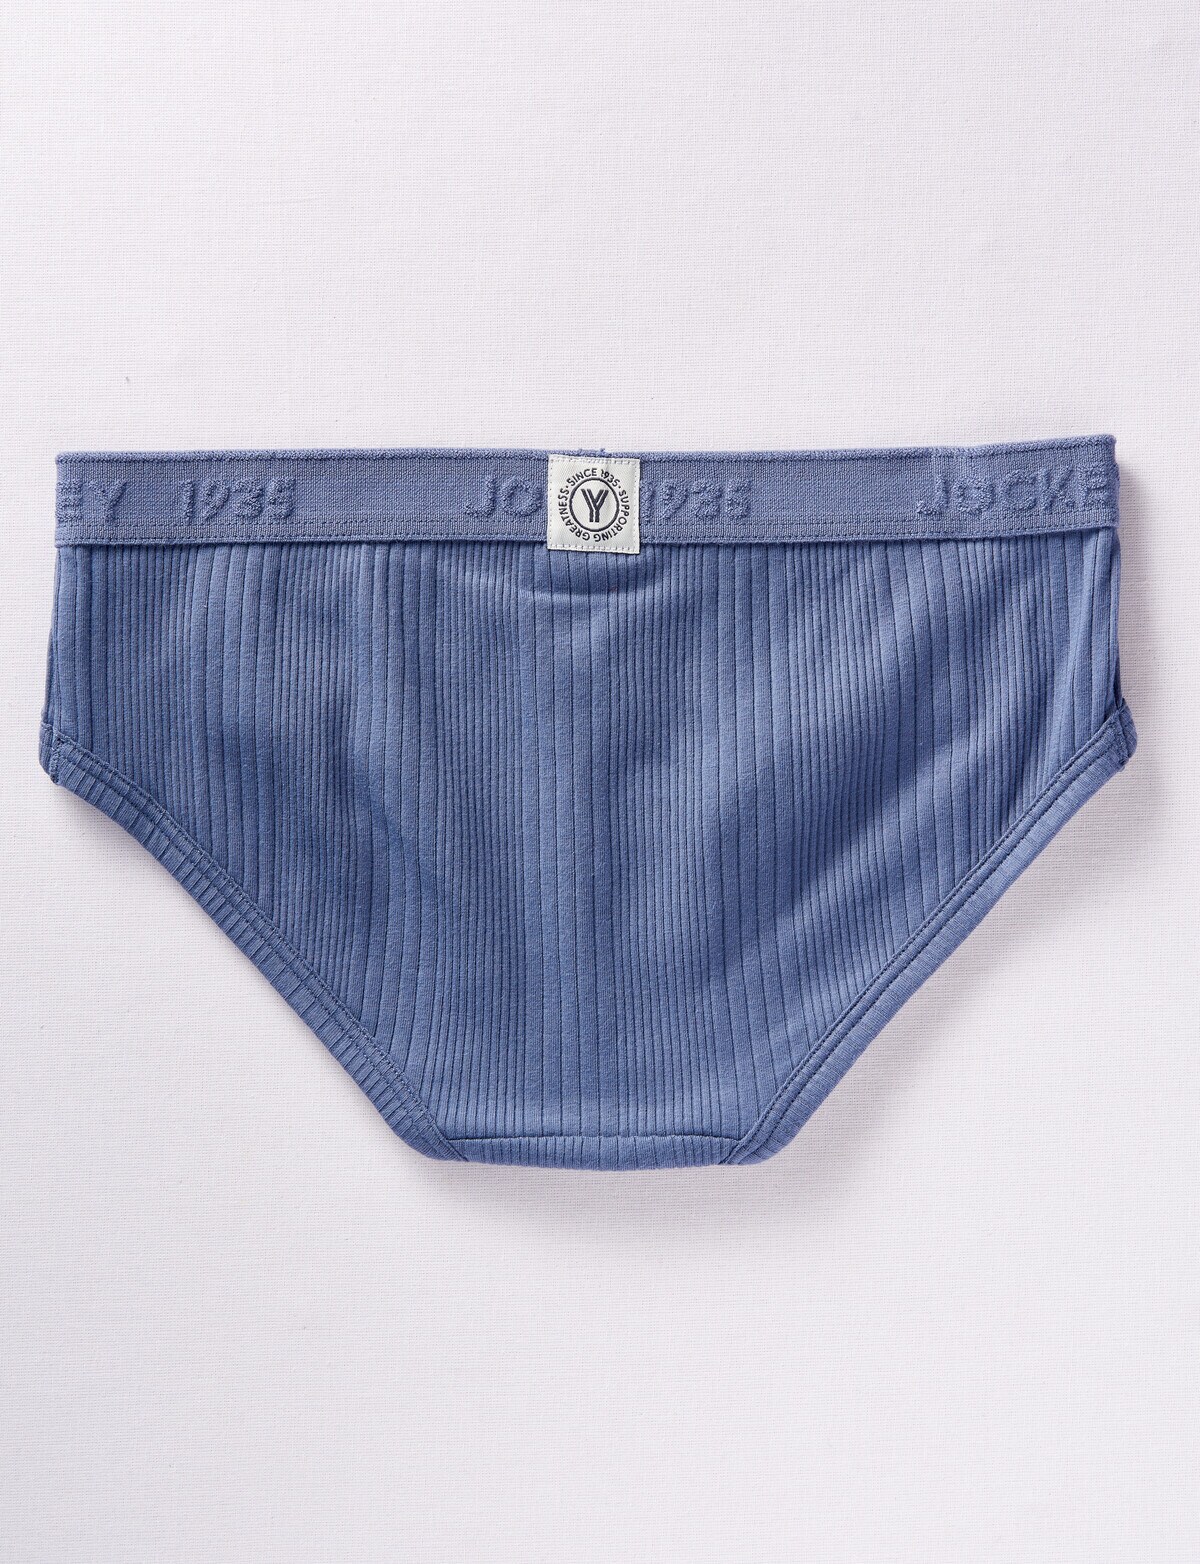 Jockey 1935 Jersey Bikini Brief, Young Melody, 6-16 - Underwear